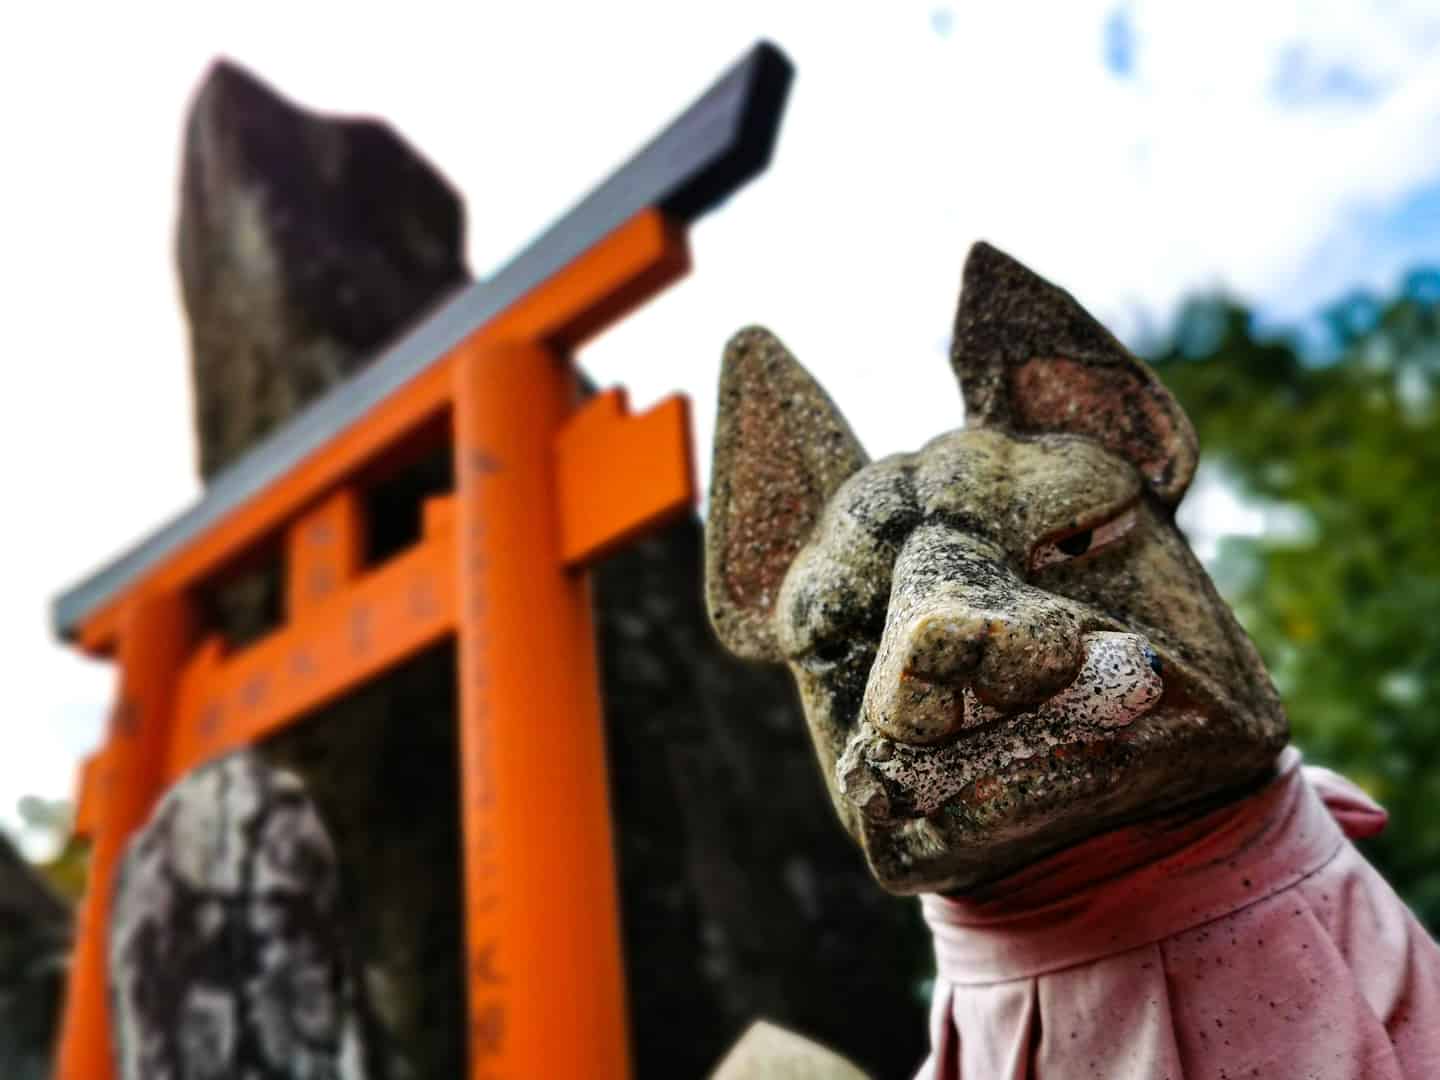 Another stone dog at Fushimi Inari